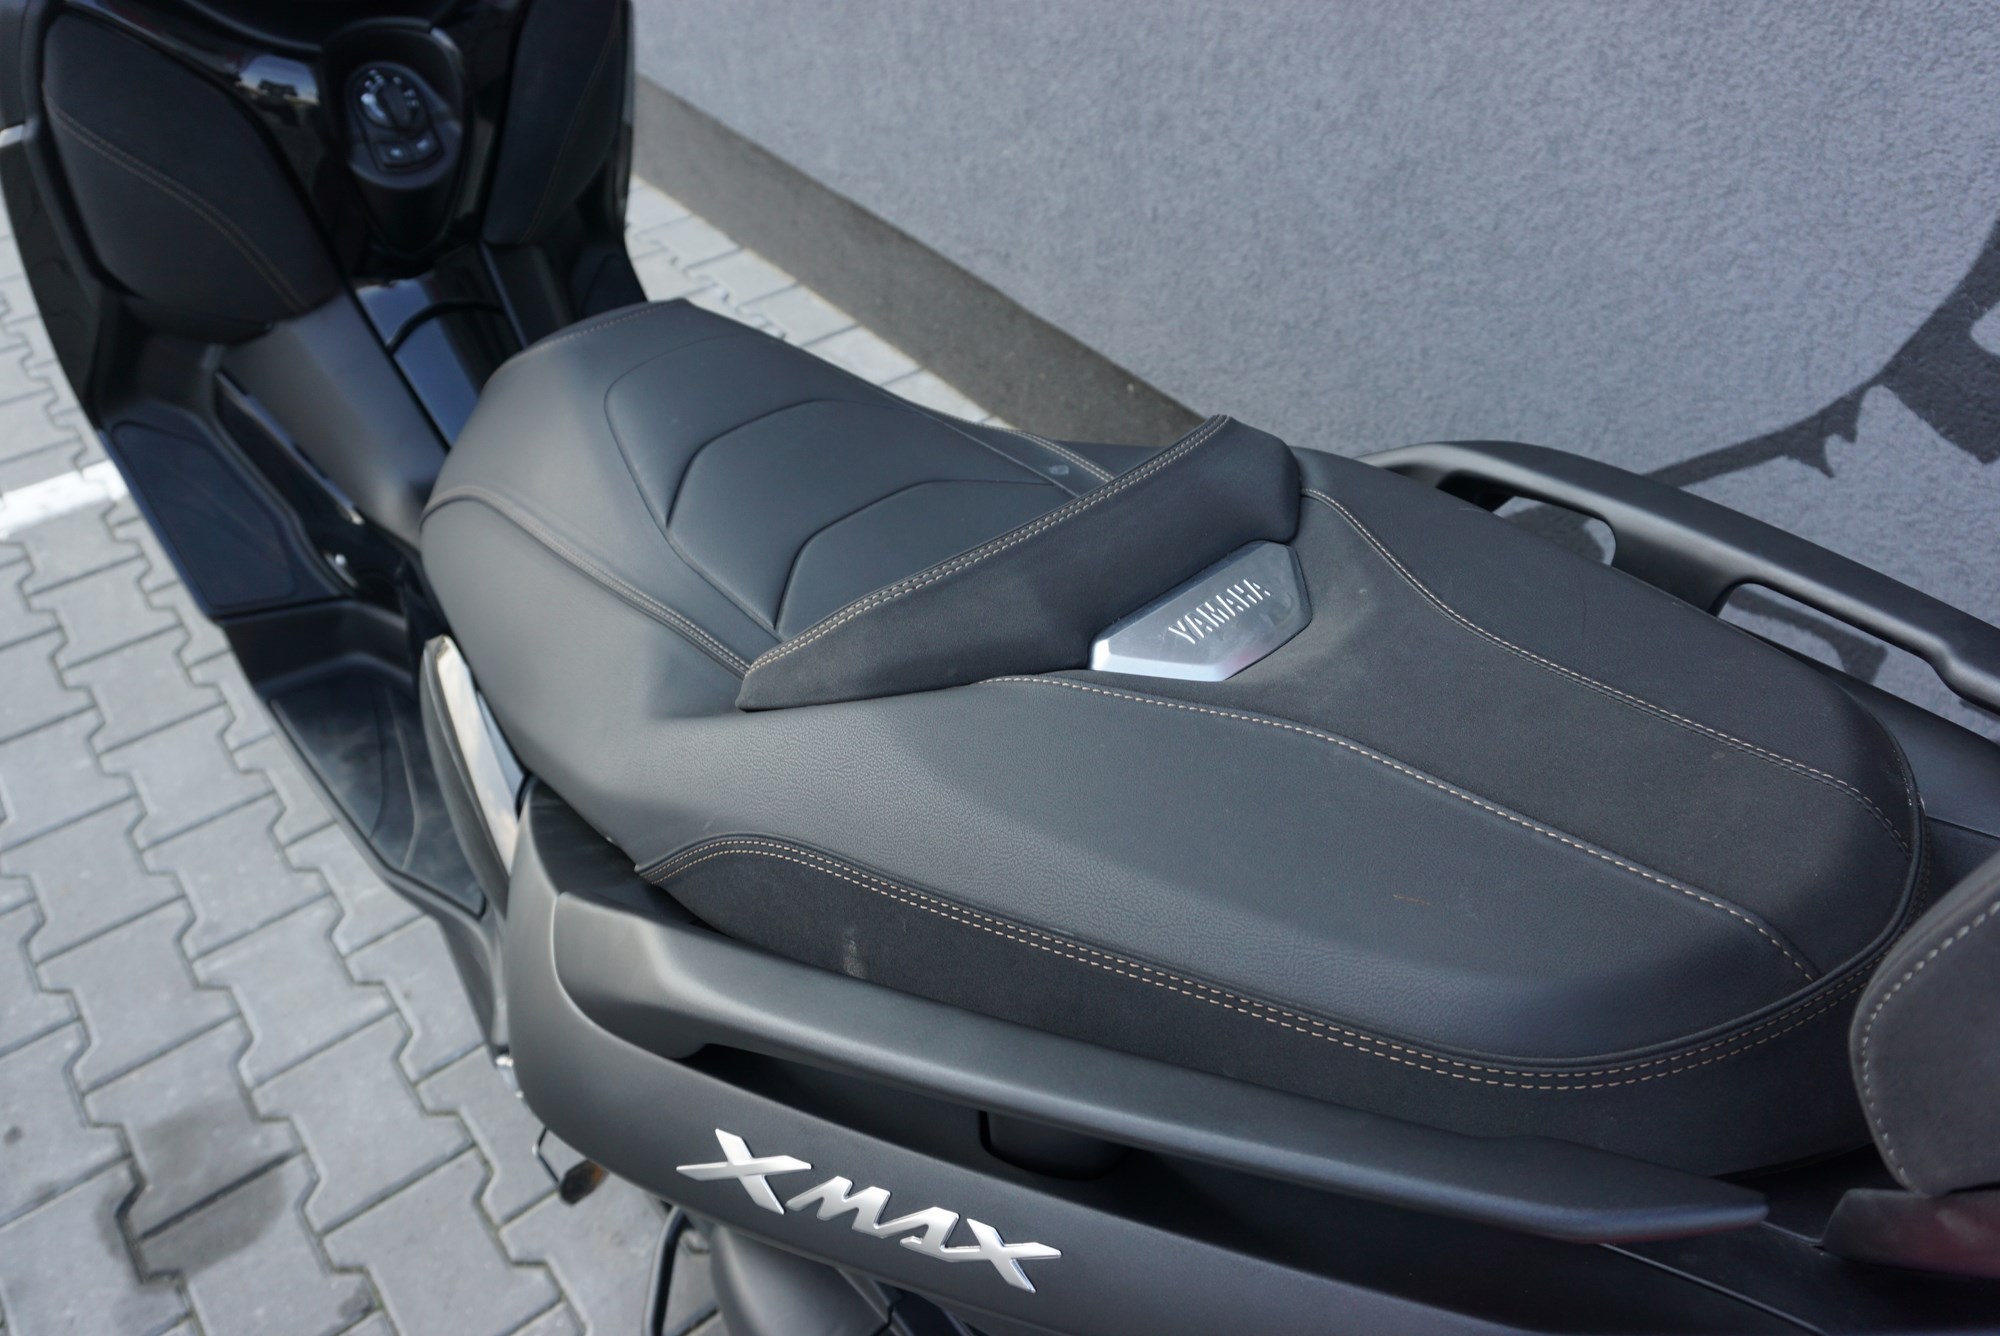 Yamaha X-Max 125 Iron Max